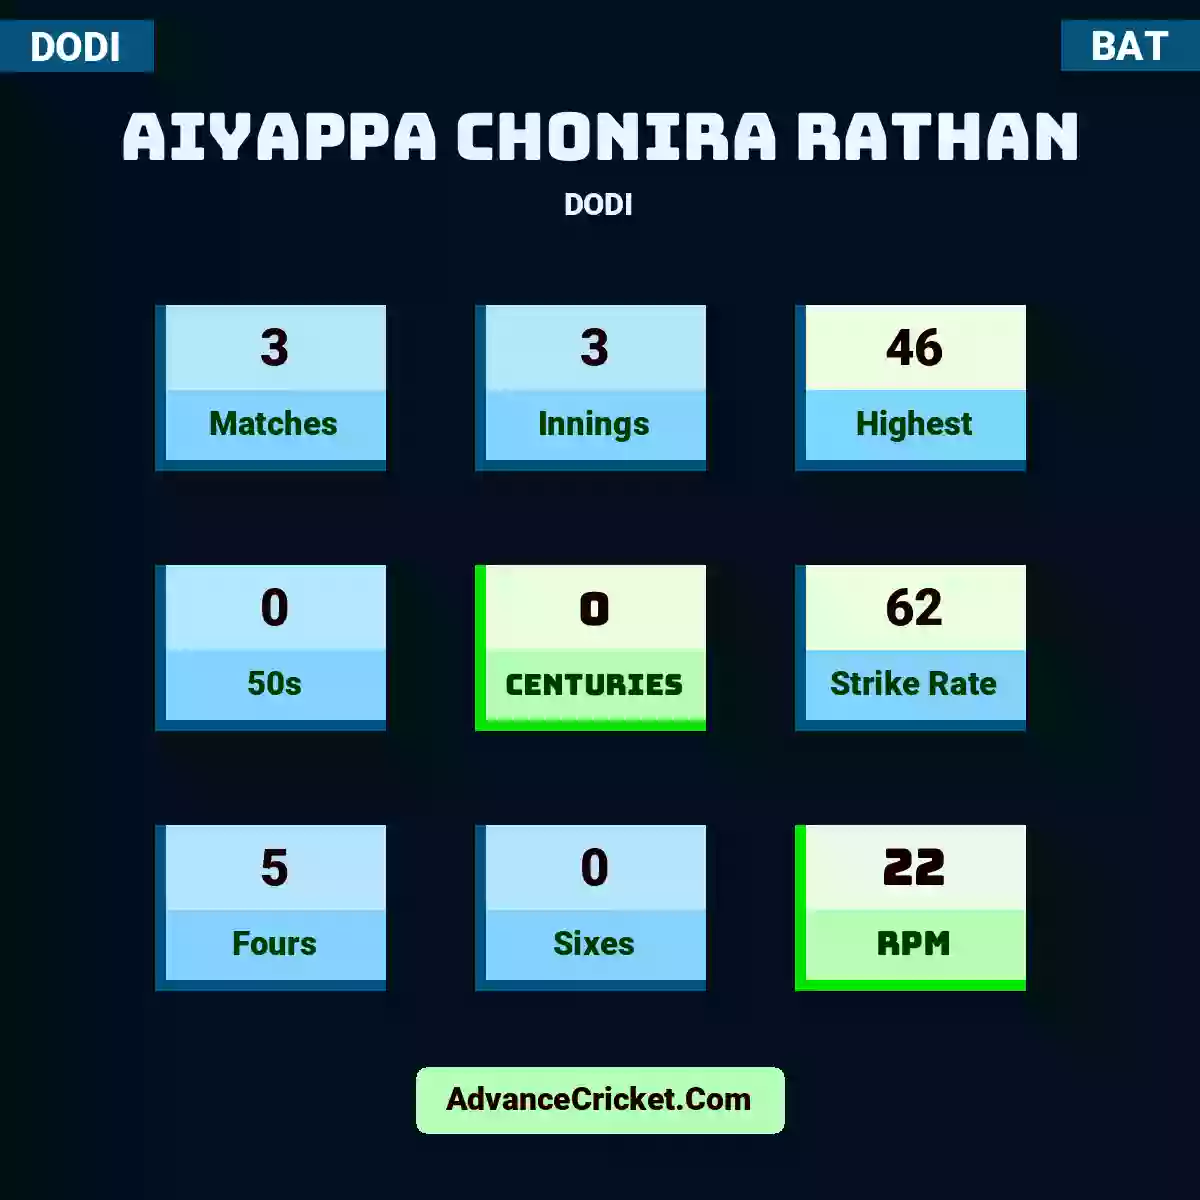 Aiyappa Chonira Rathan DODI , Aiyappa Chonira Rathan played 3 matches, scored 46 runs as highest, 0 half-centuries, and 0 centuries, with a strike rate of 62. A.Chonira.Rathan hit 5 fours and 0 sixes, with an RPM of 22.